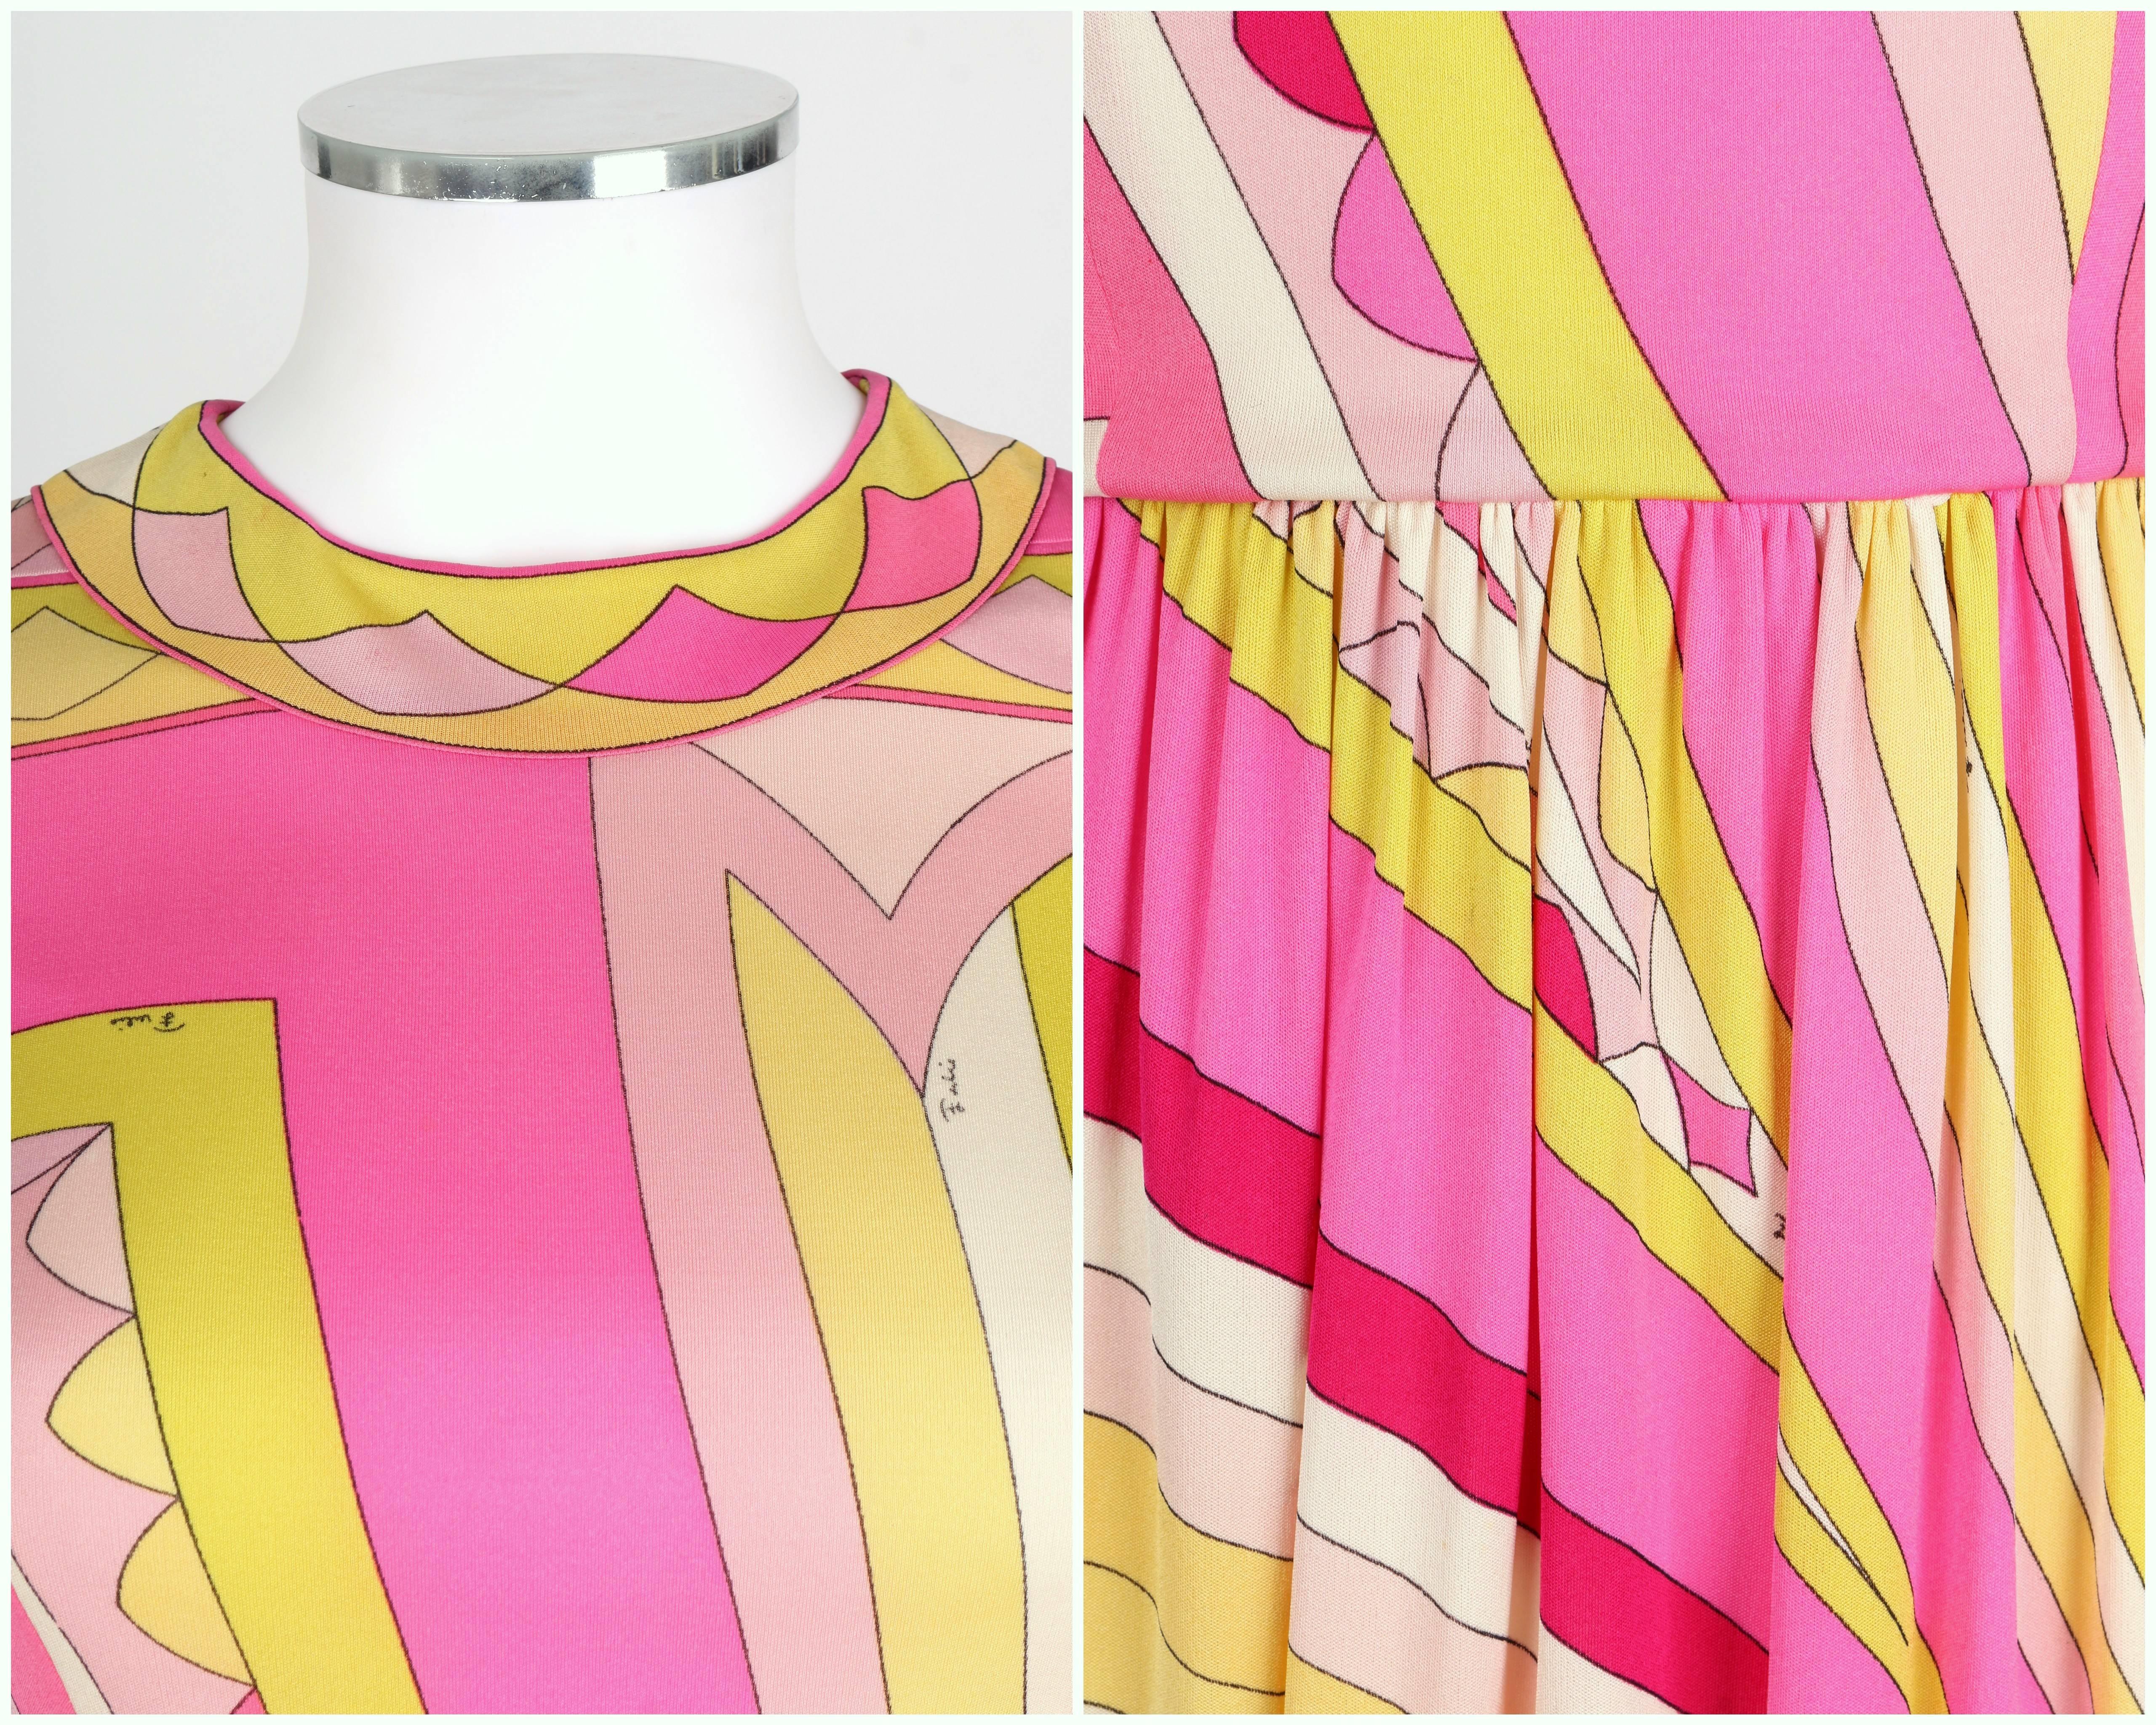 EMILIO PUCCI 1960s Pink Yellow Sunburst Signature Print Silk Jersey Dress Sz 10 For Sale 2